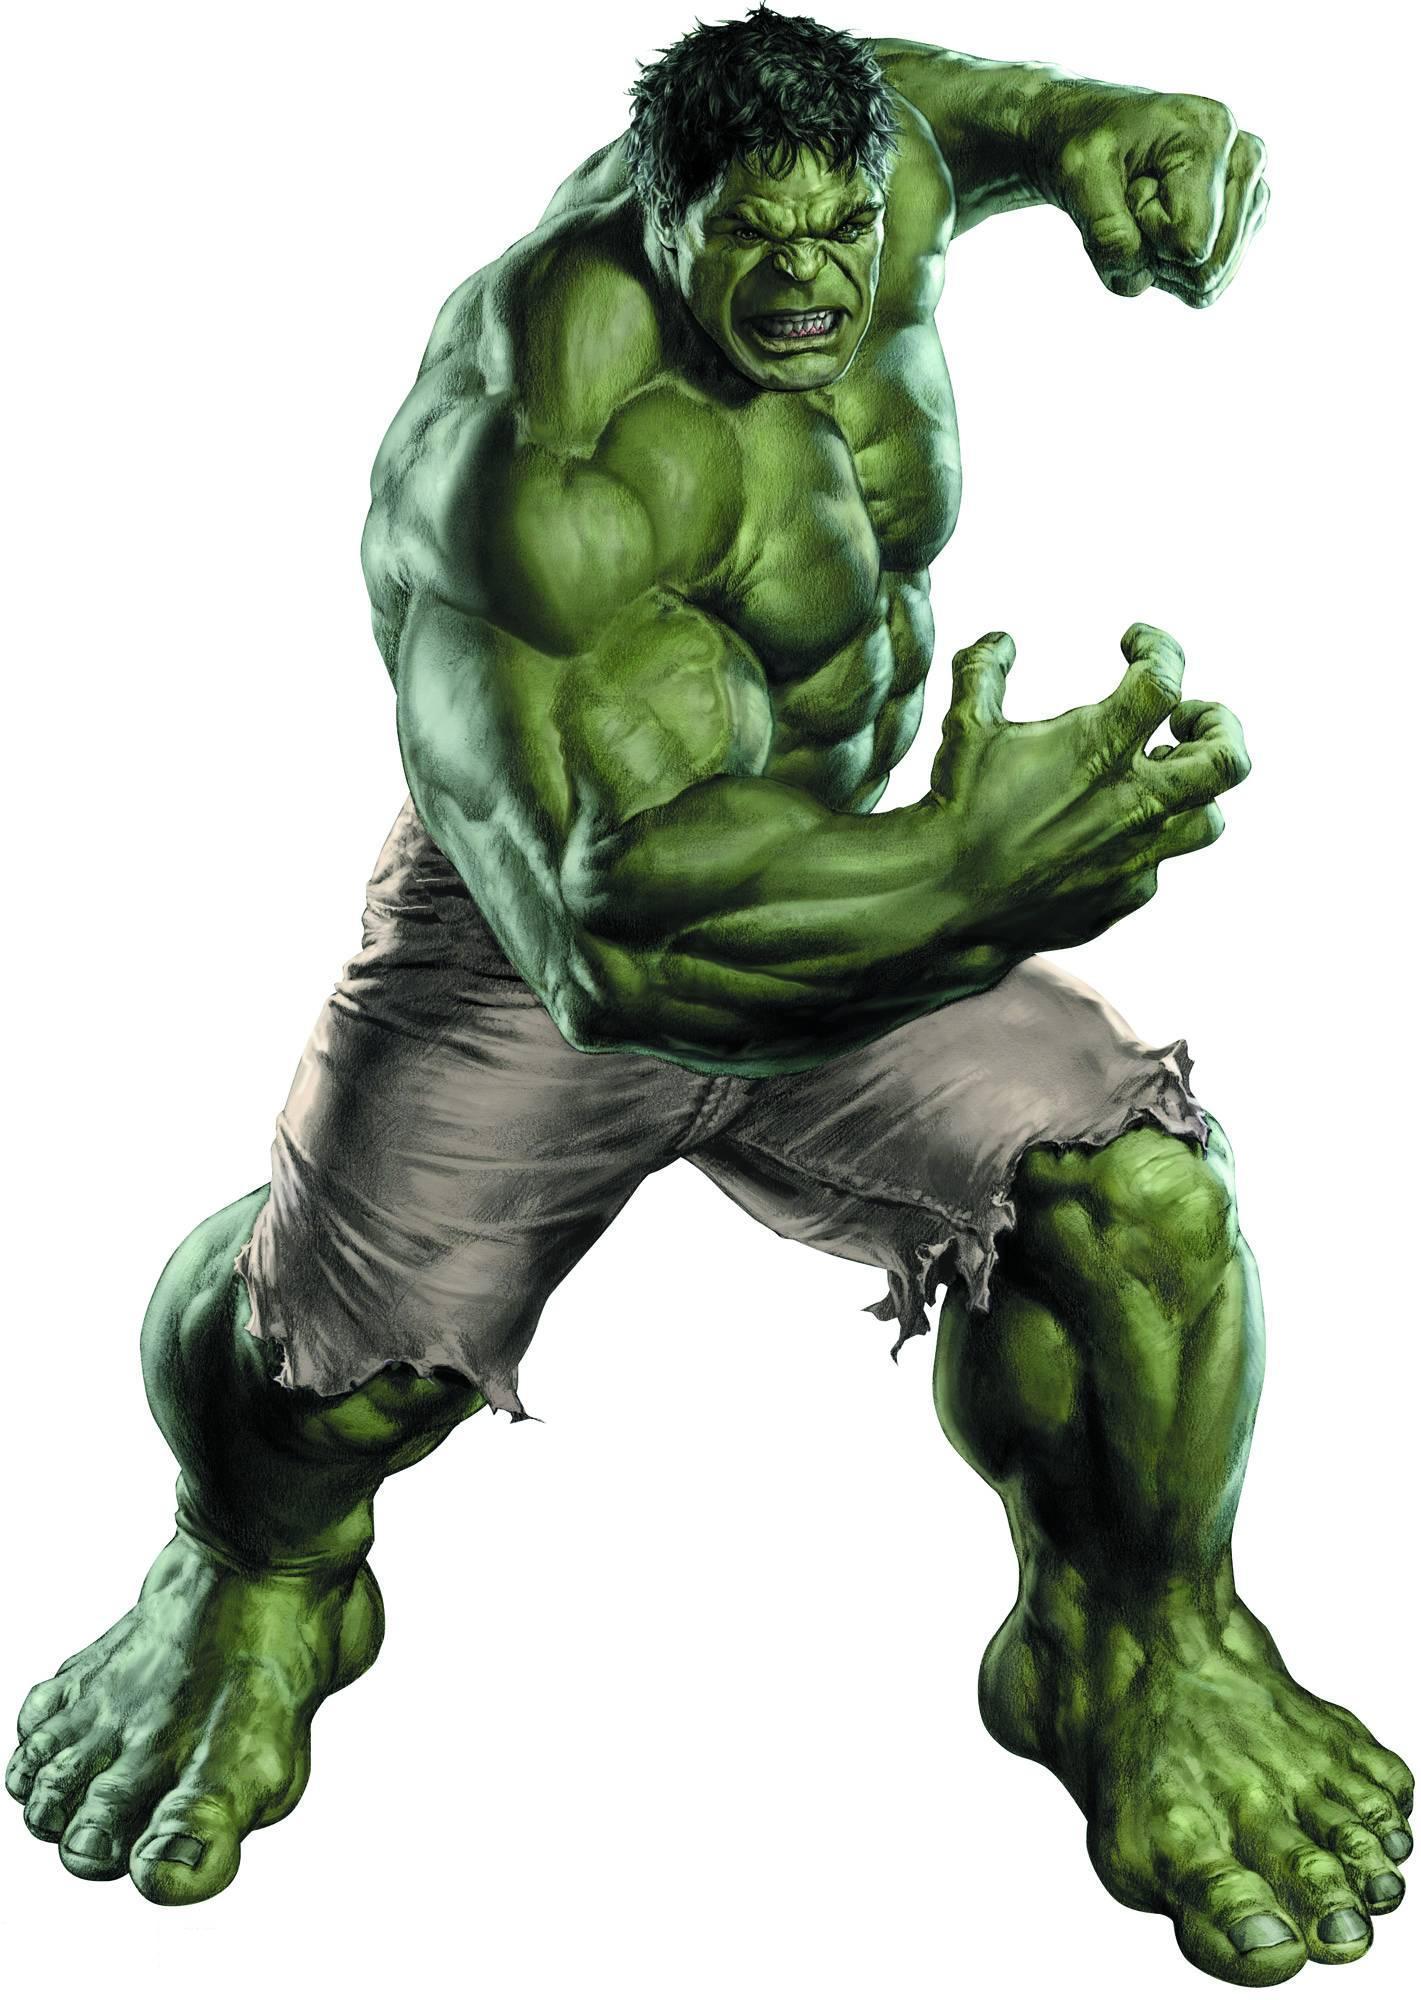 Hulk-hinh-anh-sieu-anh-hung-the-avengers-Super-hero